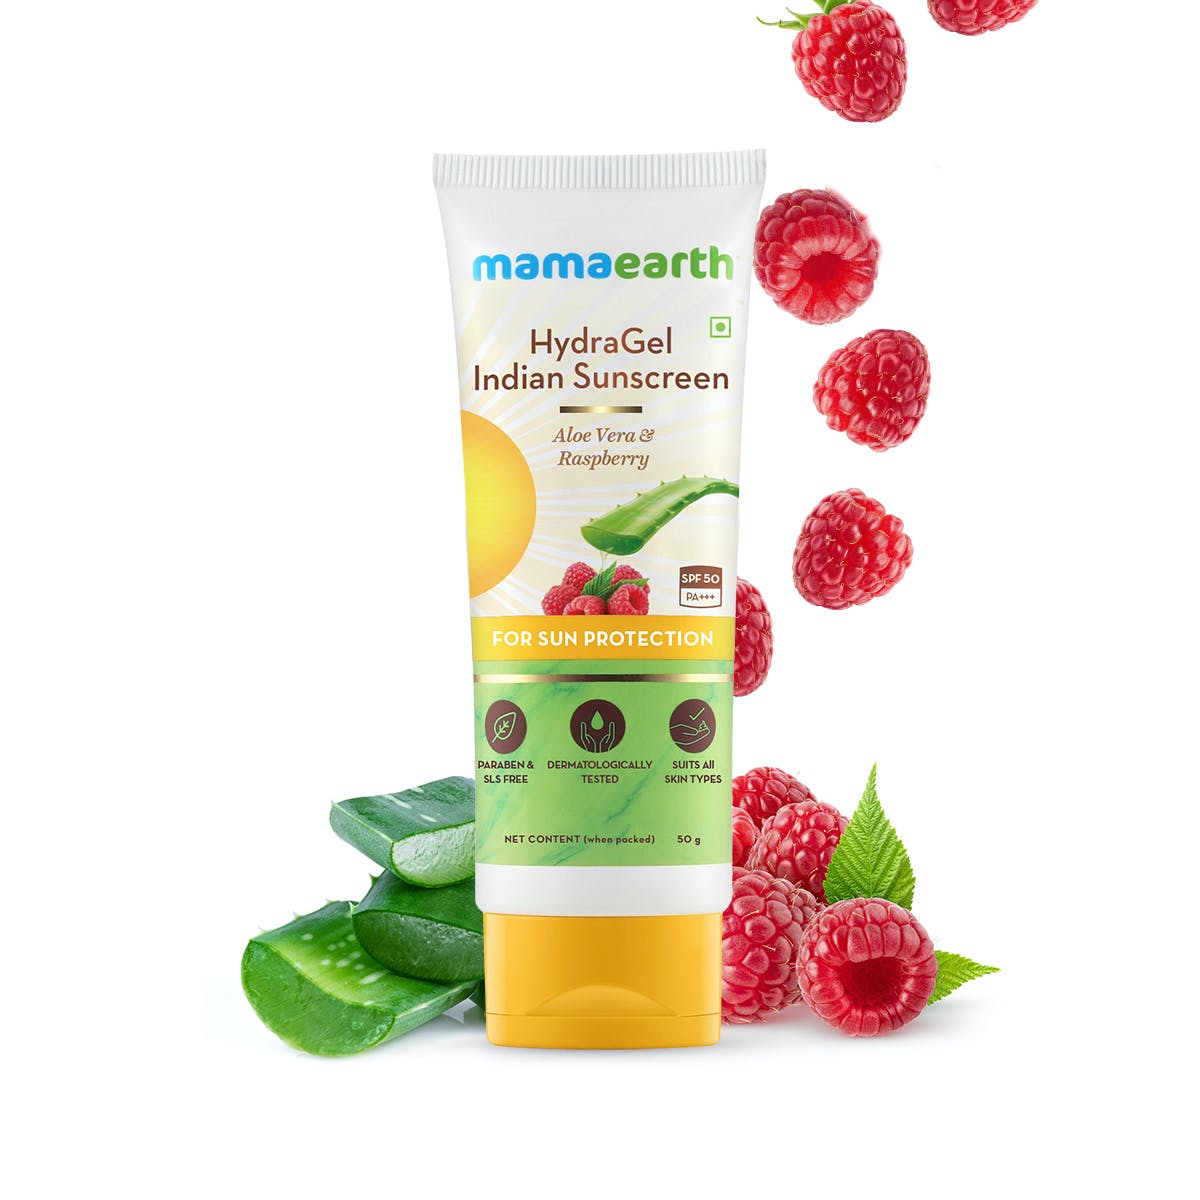 MamaEarth HydraGel Indian Sunscreen SPF 50 PA+++ (50 g) MamaEarth